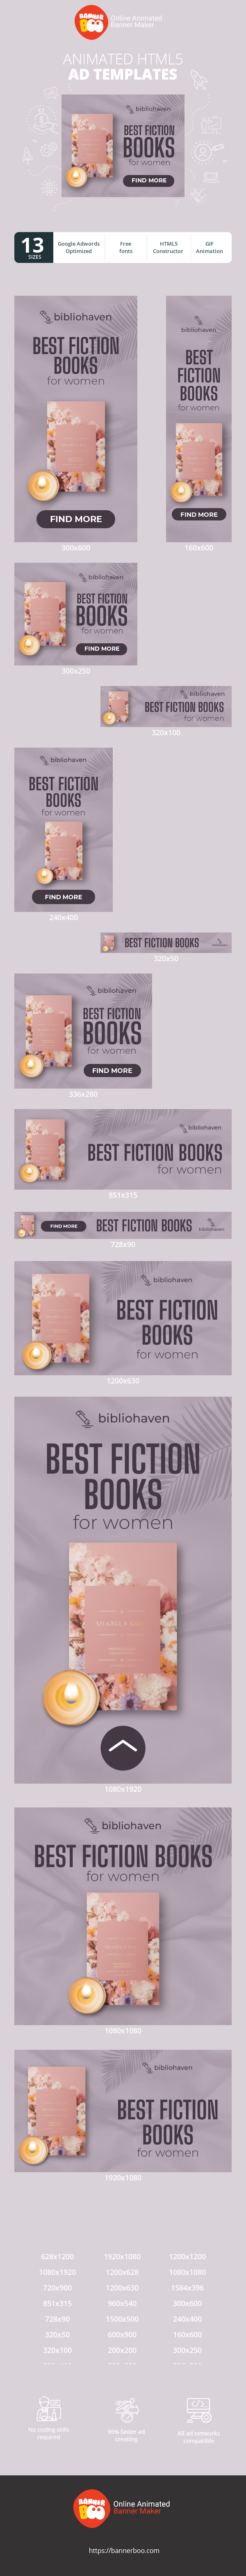 Szablon reklamy banerowej — Best Fiction Books — For Women